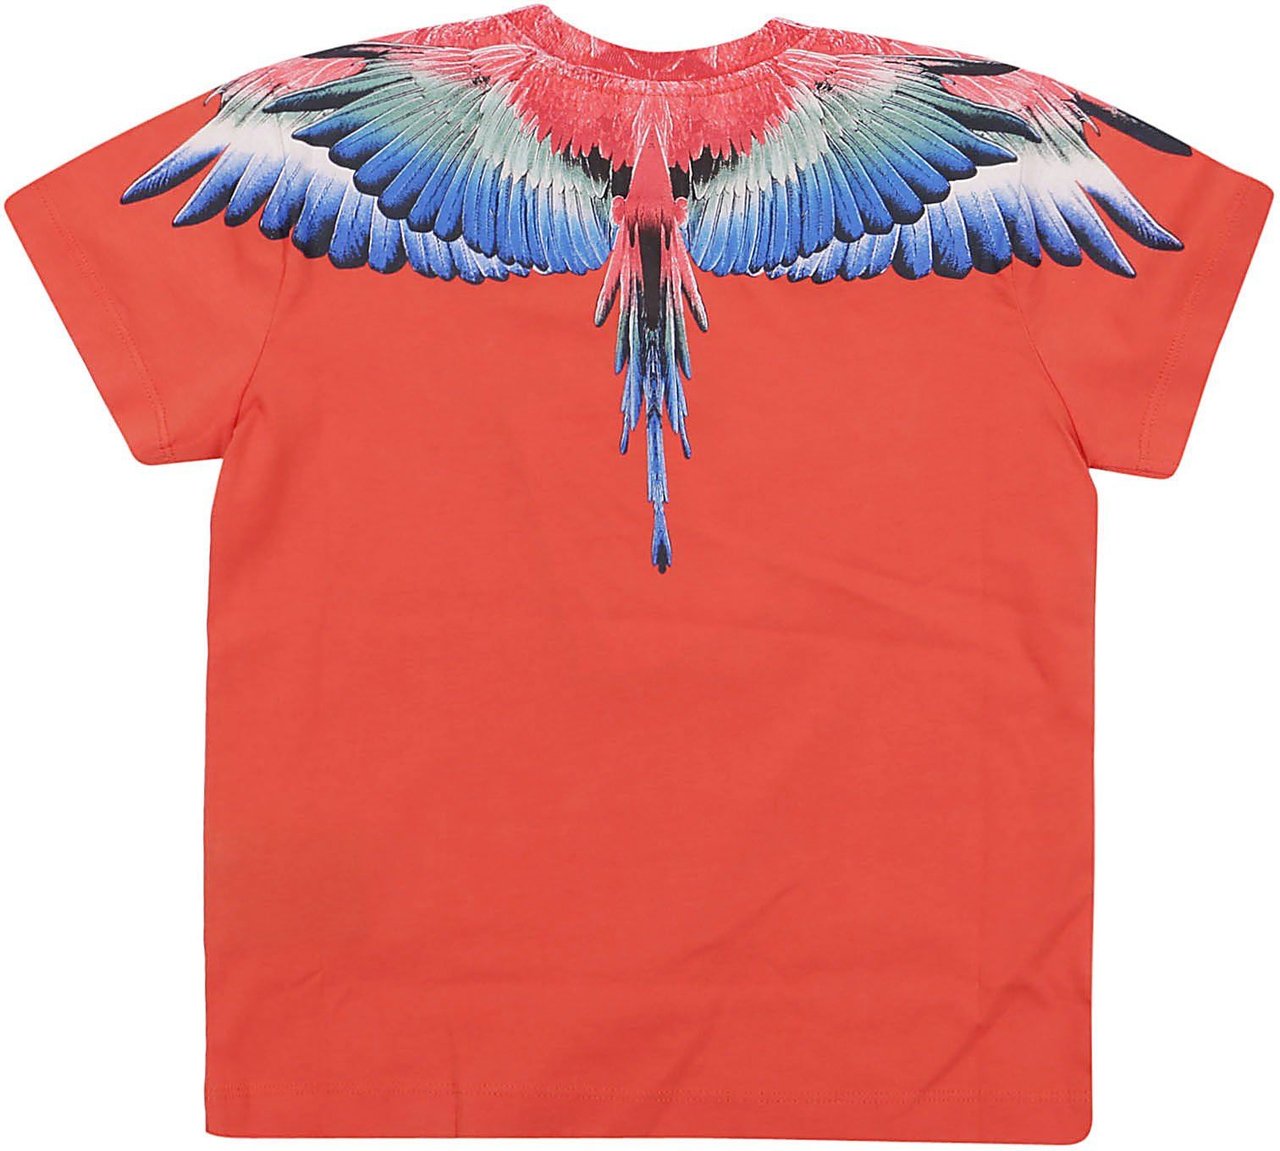 Marcelo Burlon Multicolor Wings T-Shirt S/S Rood